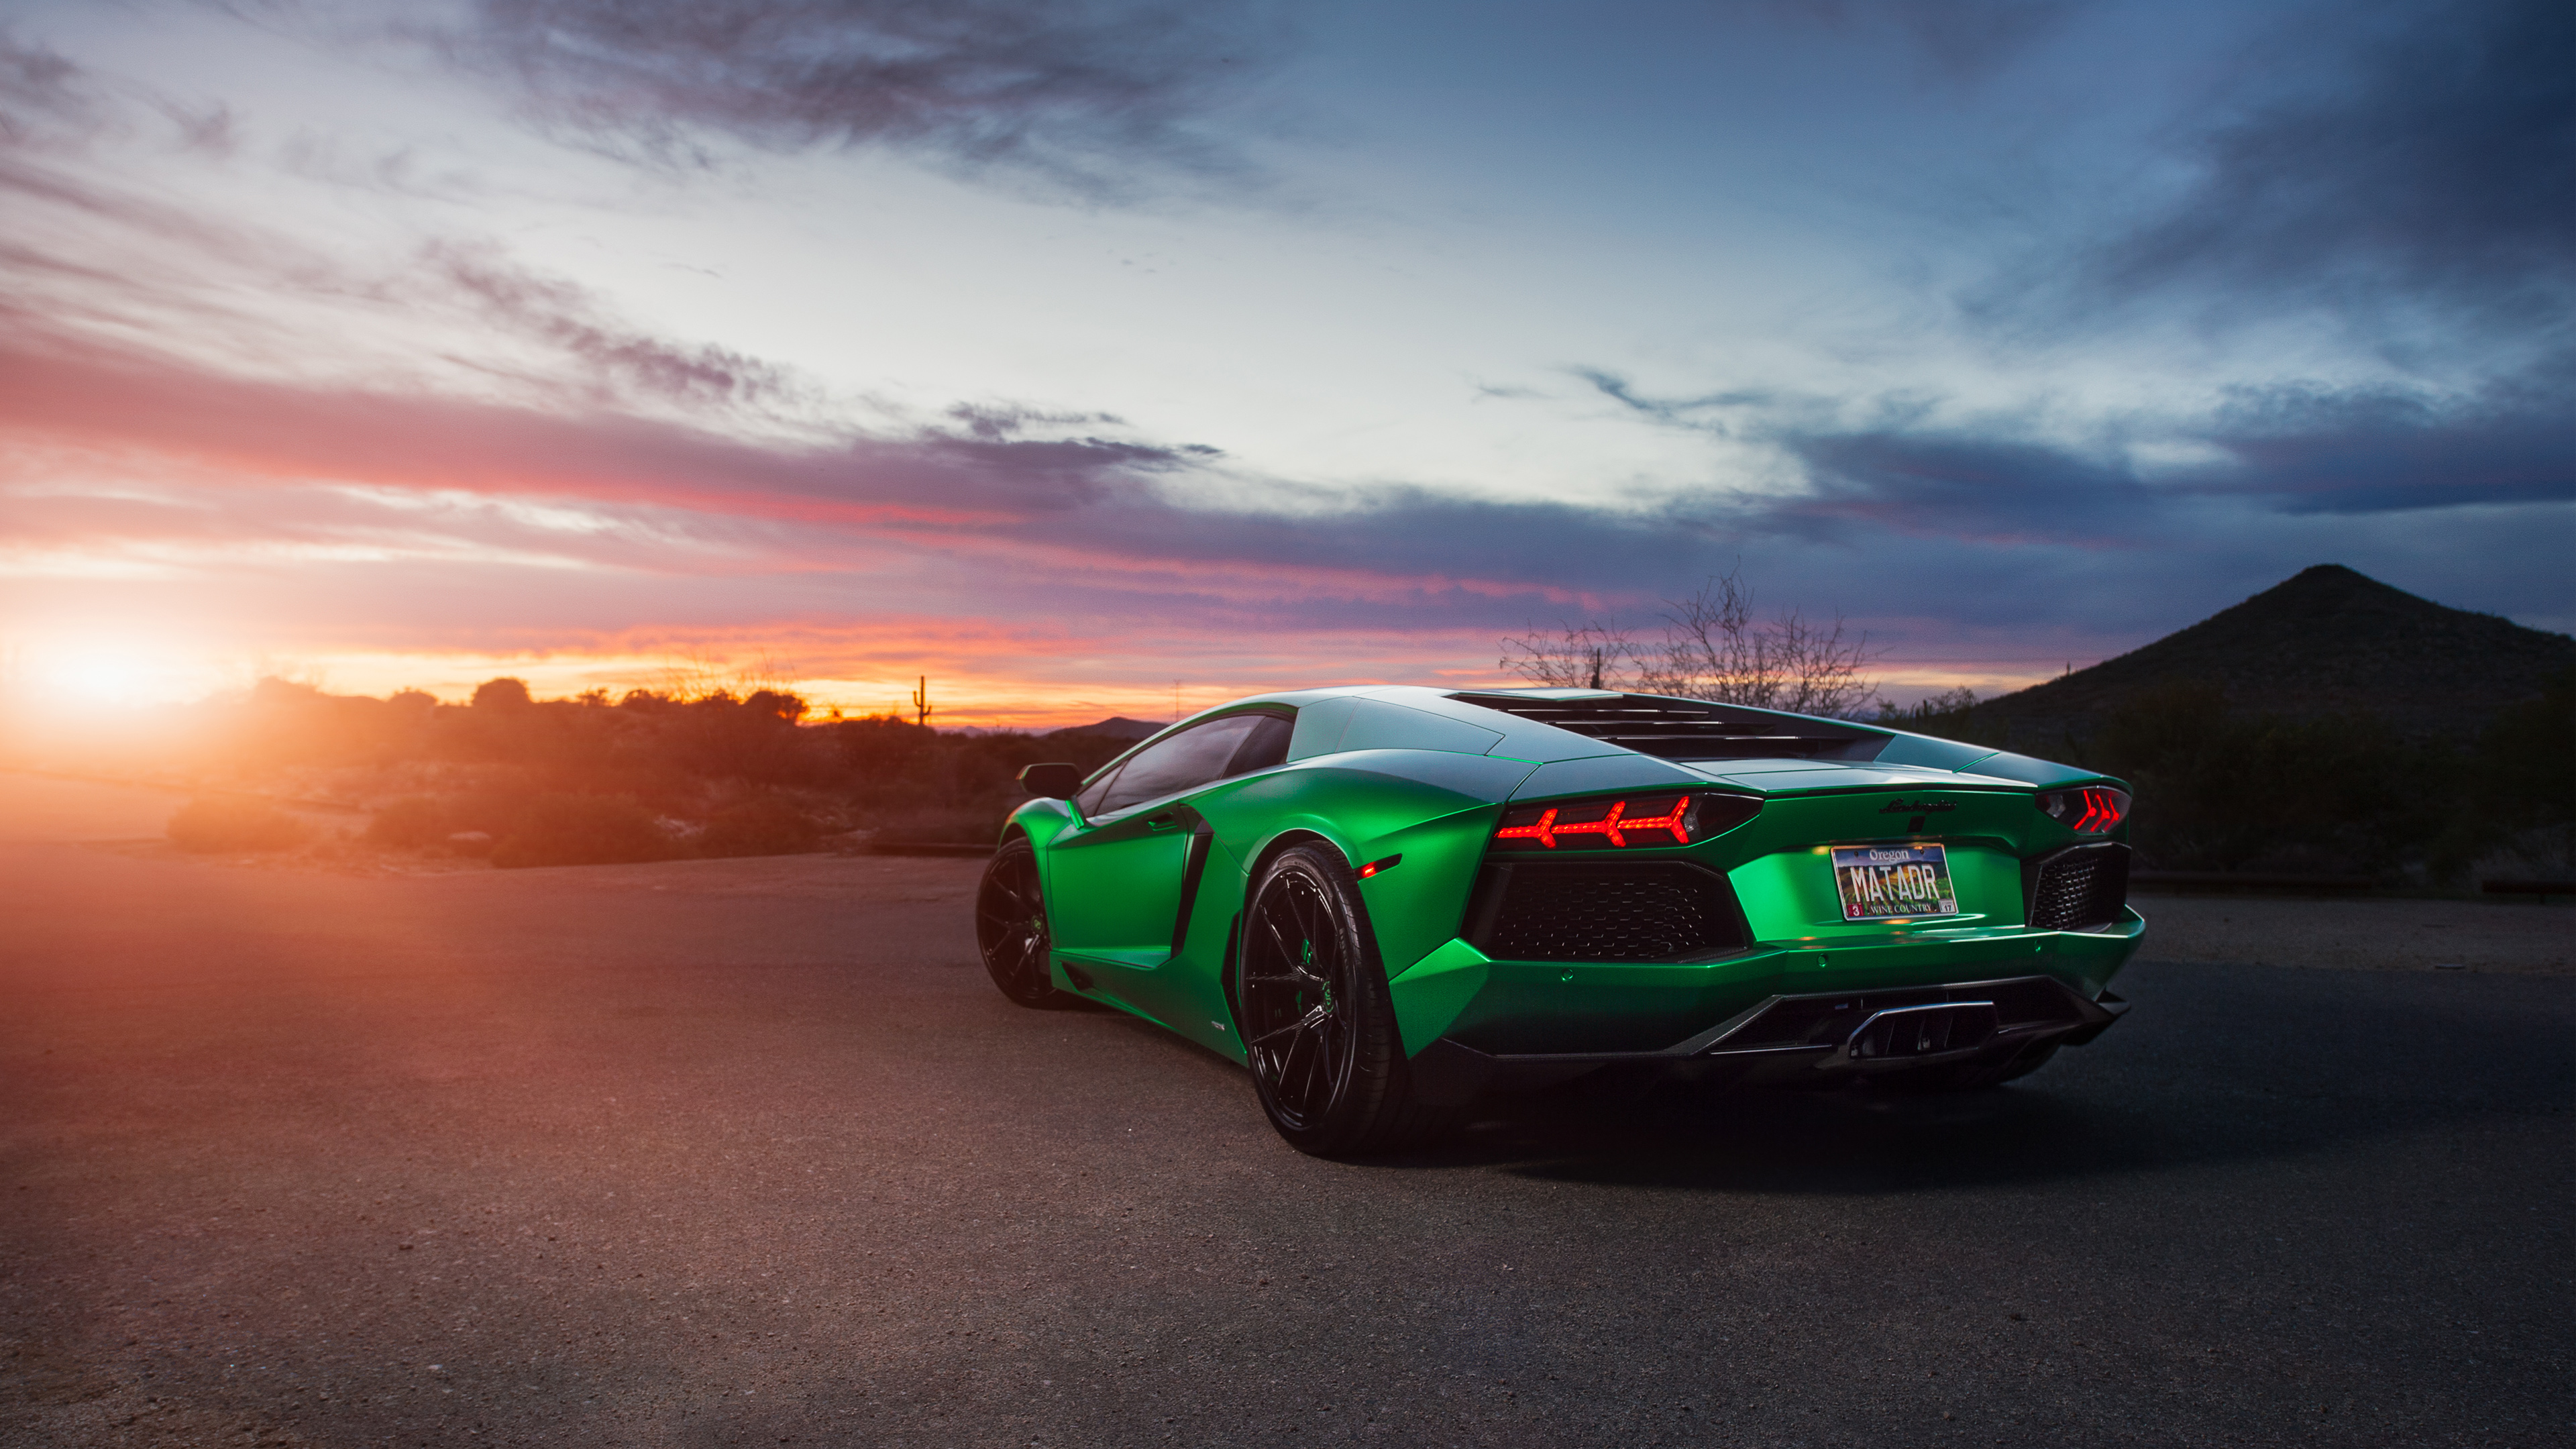 Lamborghini Aventador Green 4K Wallpaper | HD Car Wallpapers | ID #6963